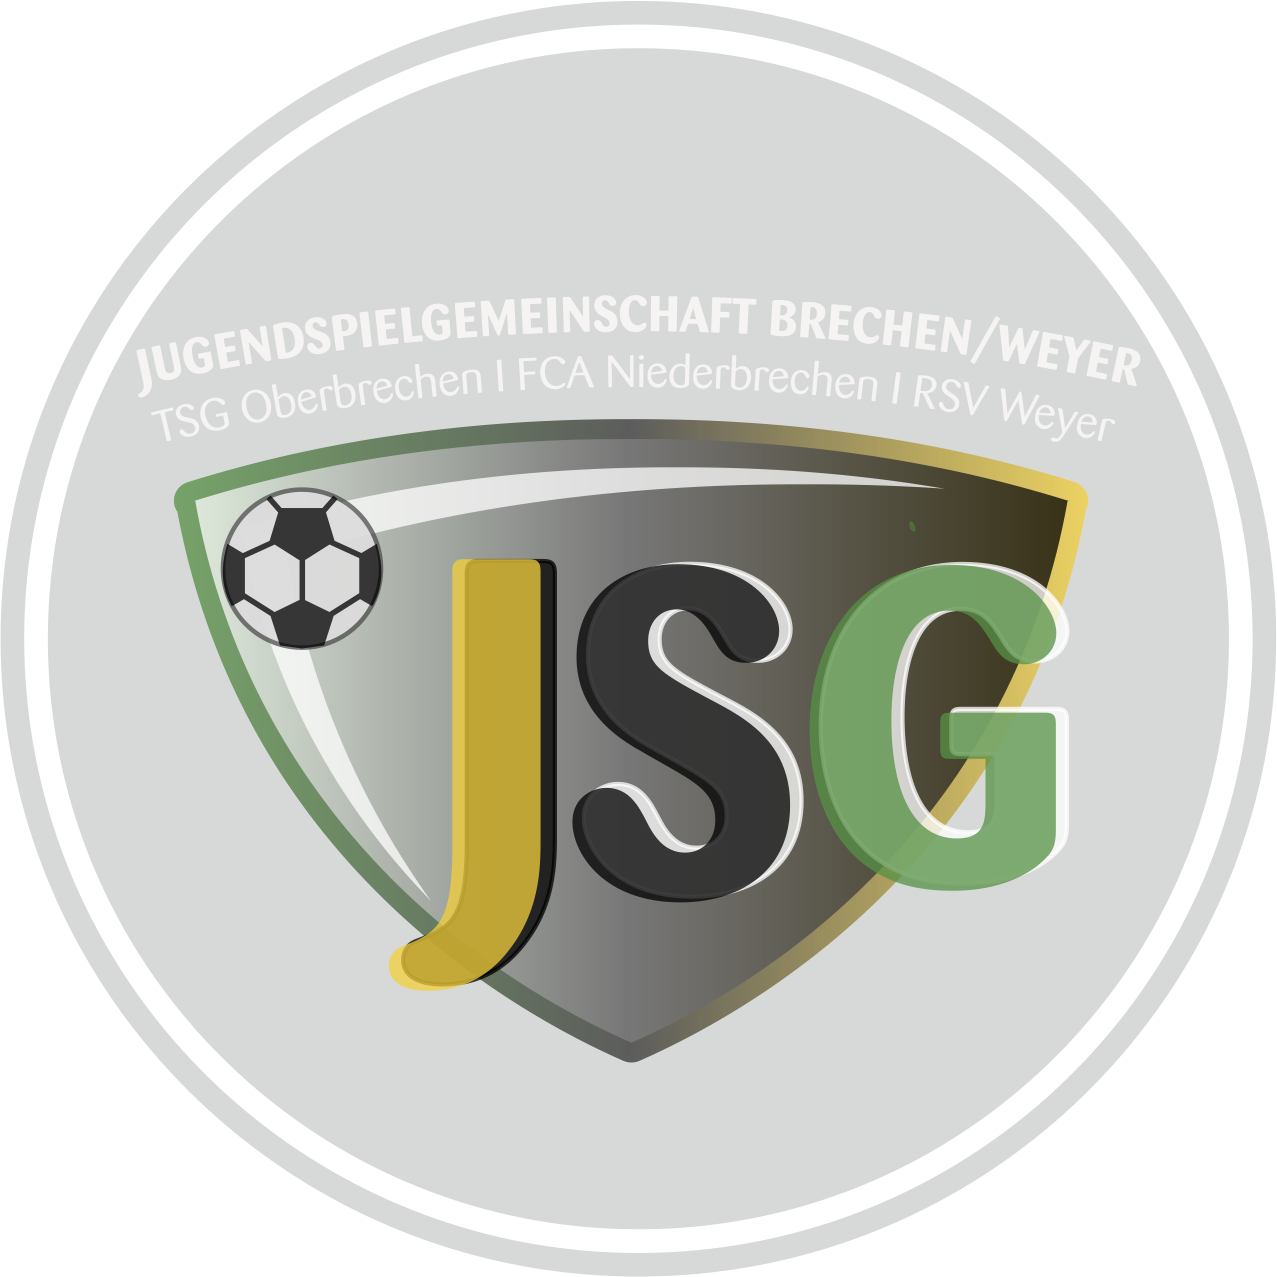 JSG Brechen/Weyer Logo